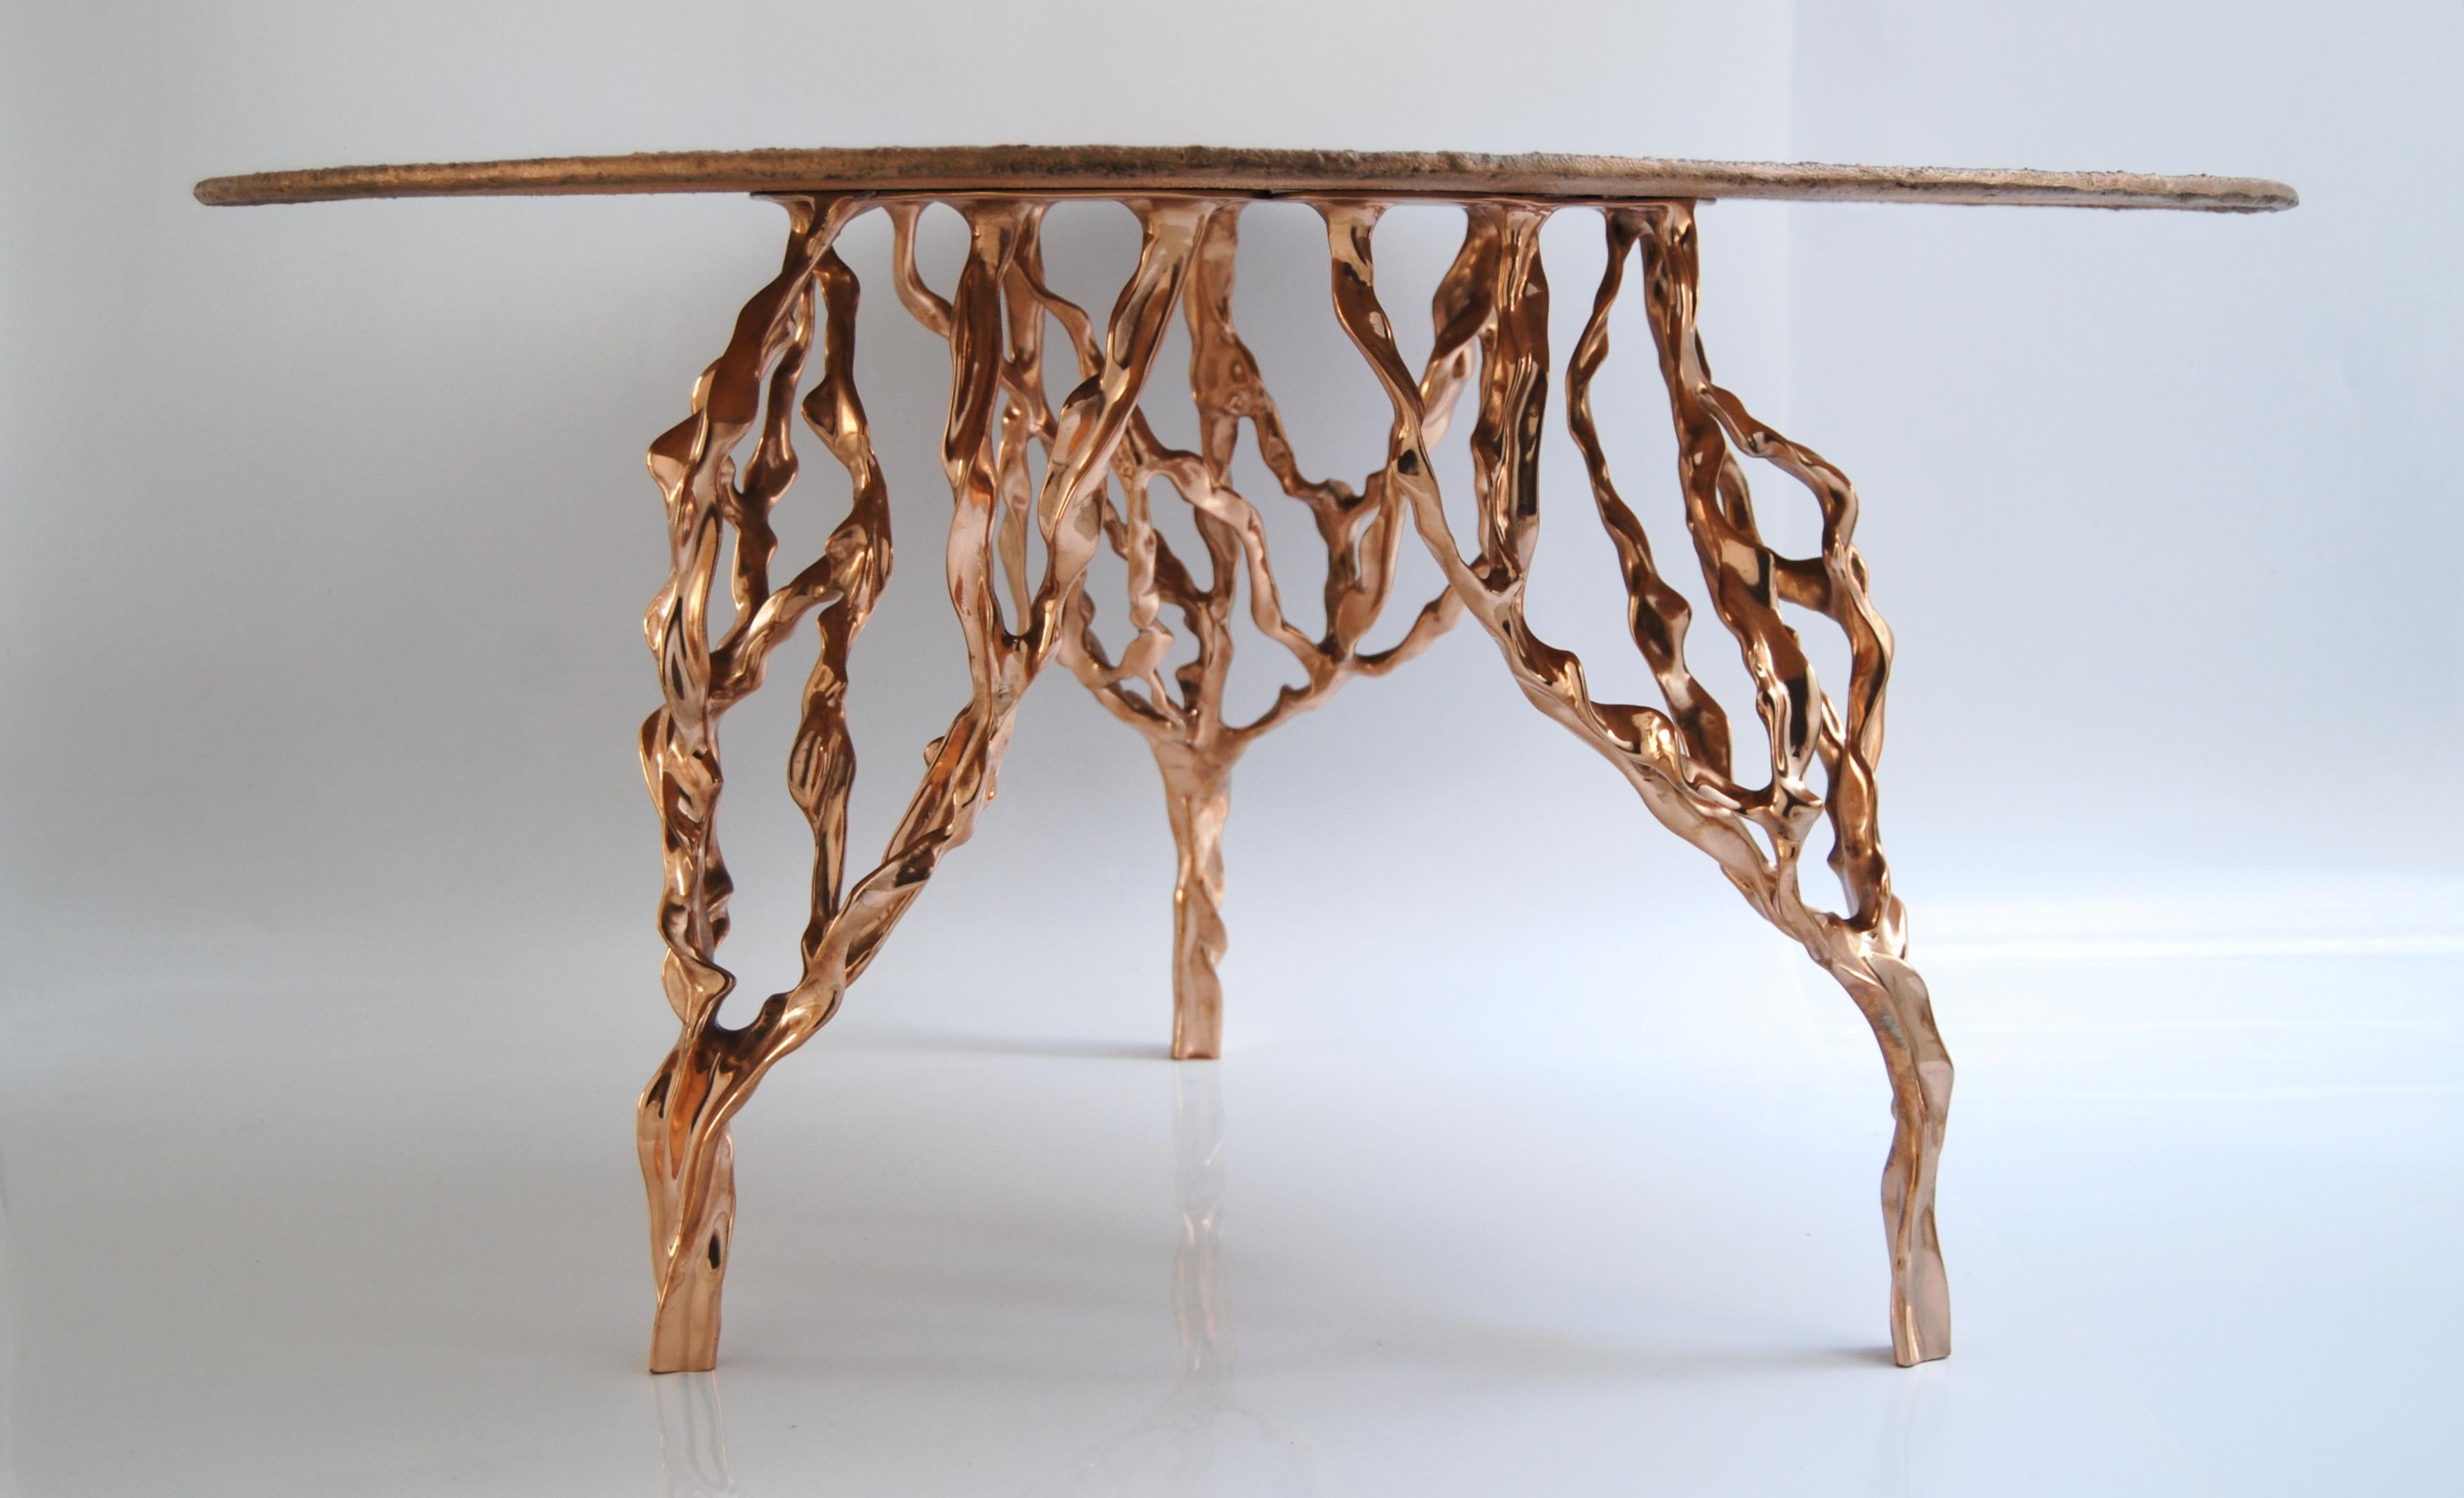 Brazilian Polished Bronze Table by FAKASAKA Design